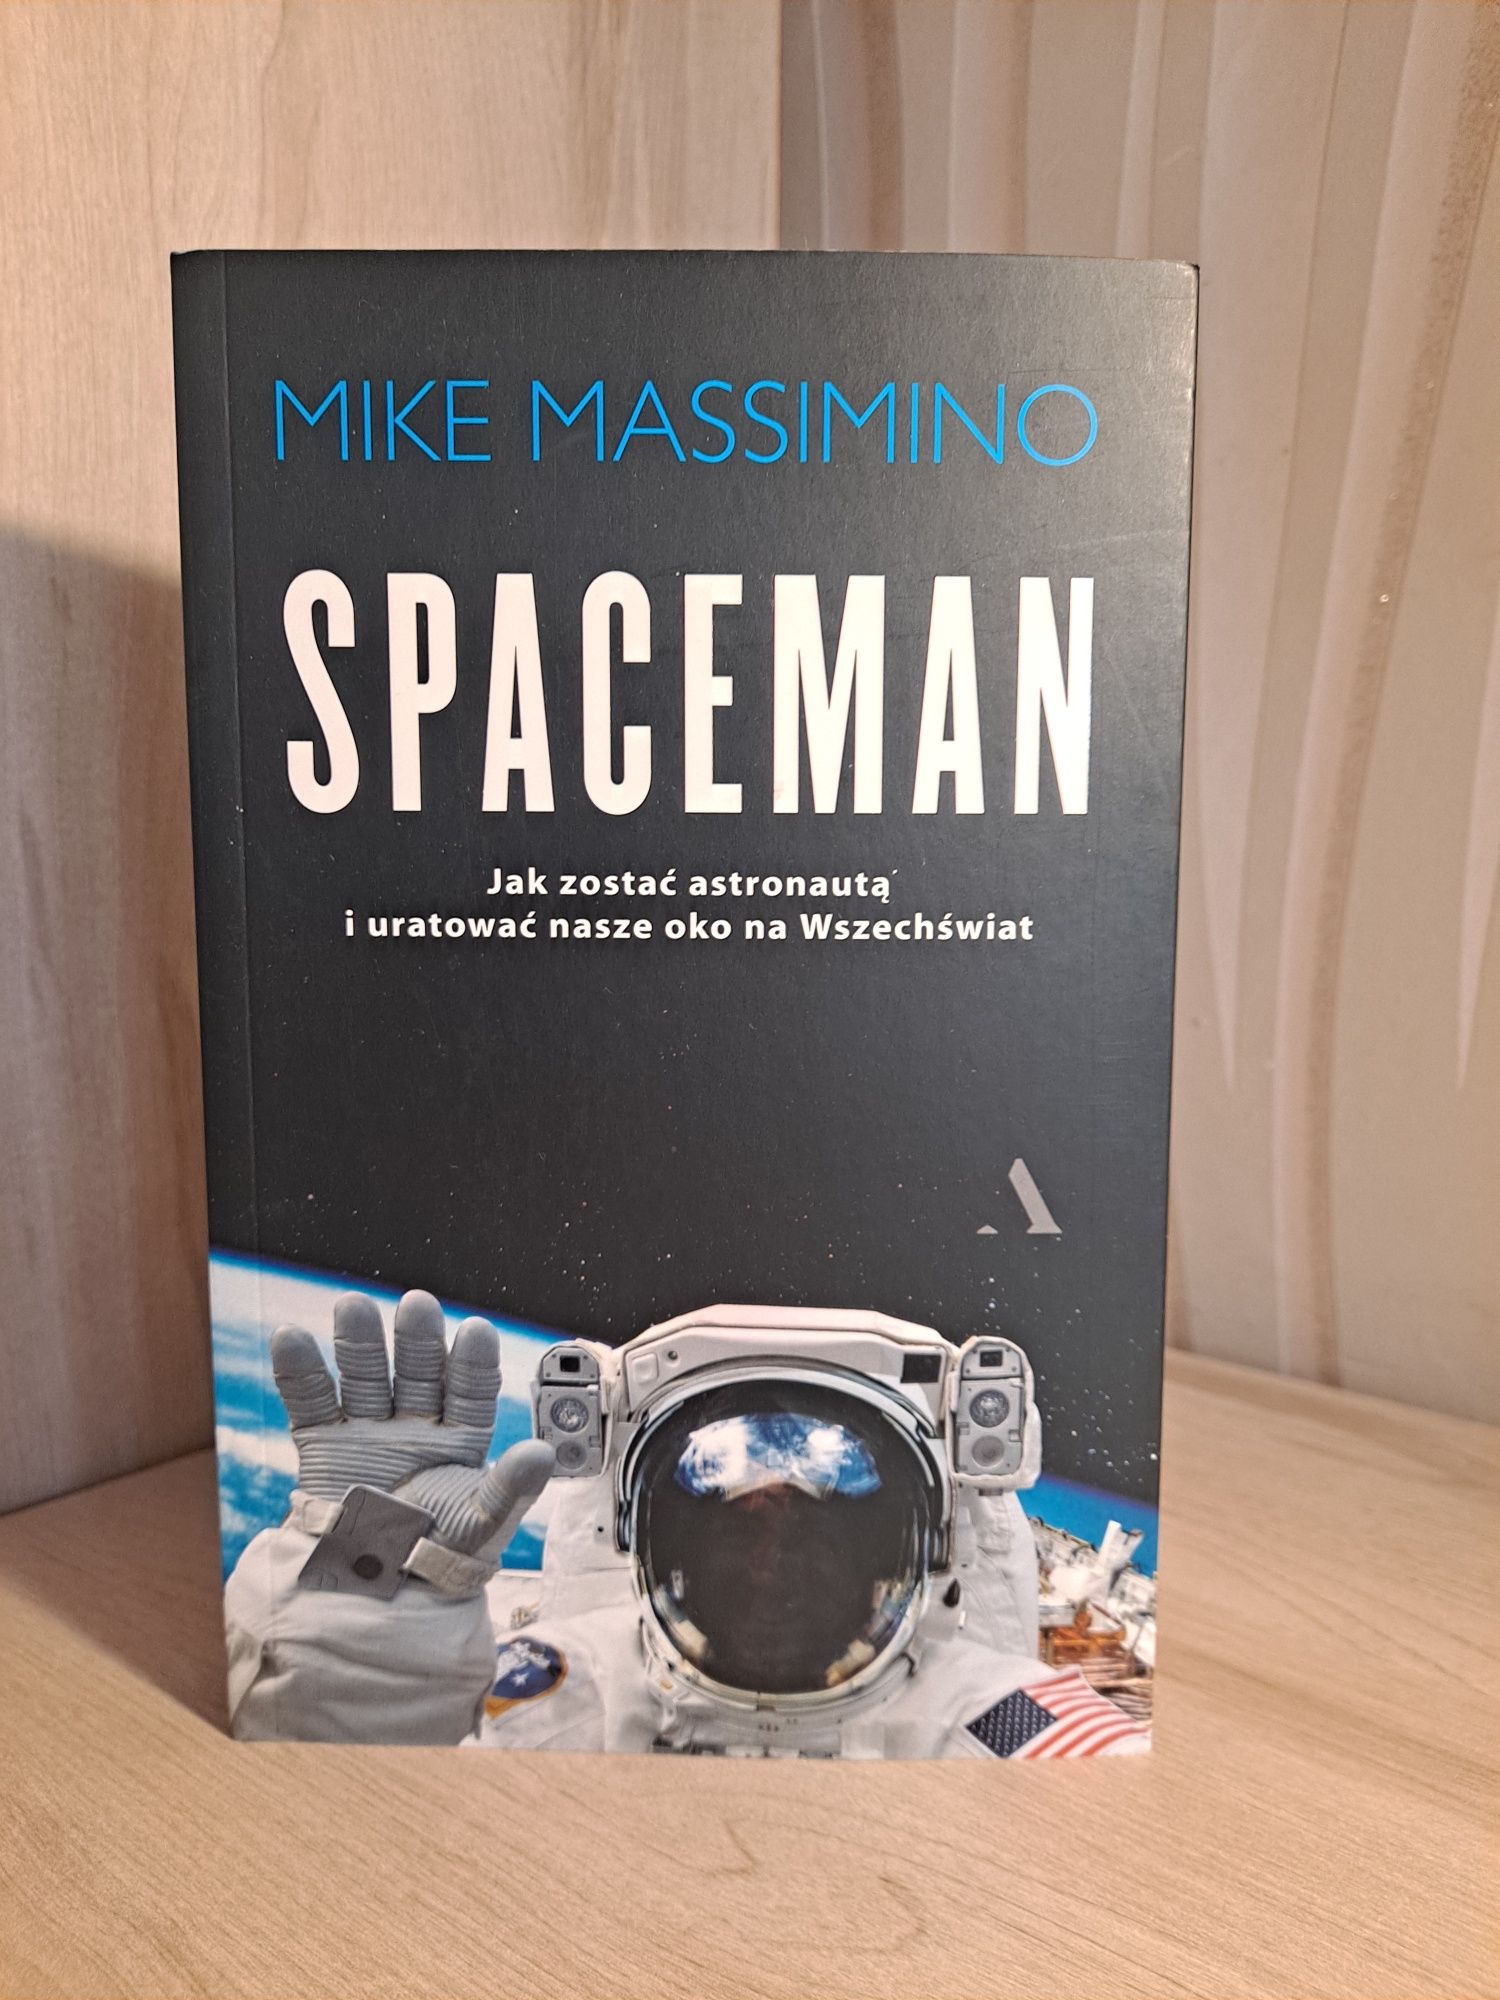 Książka "Spaceman"